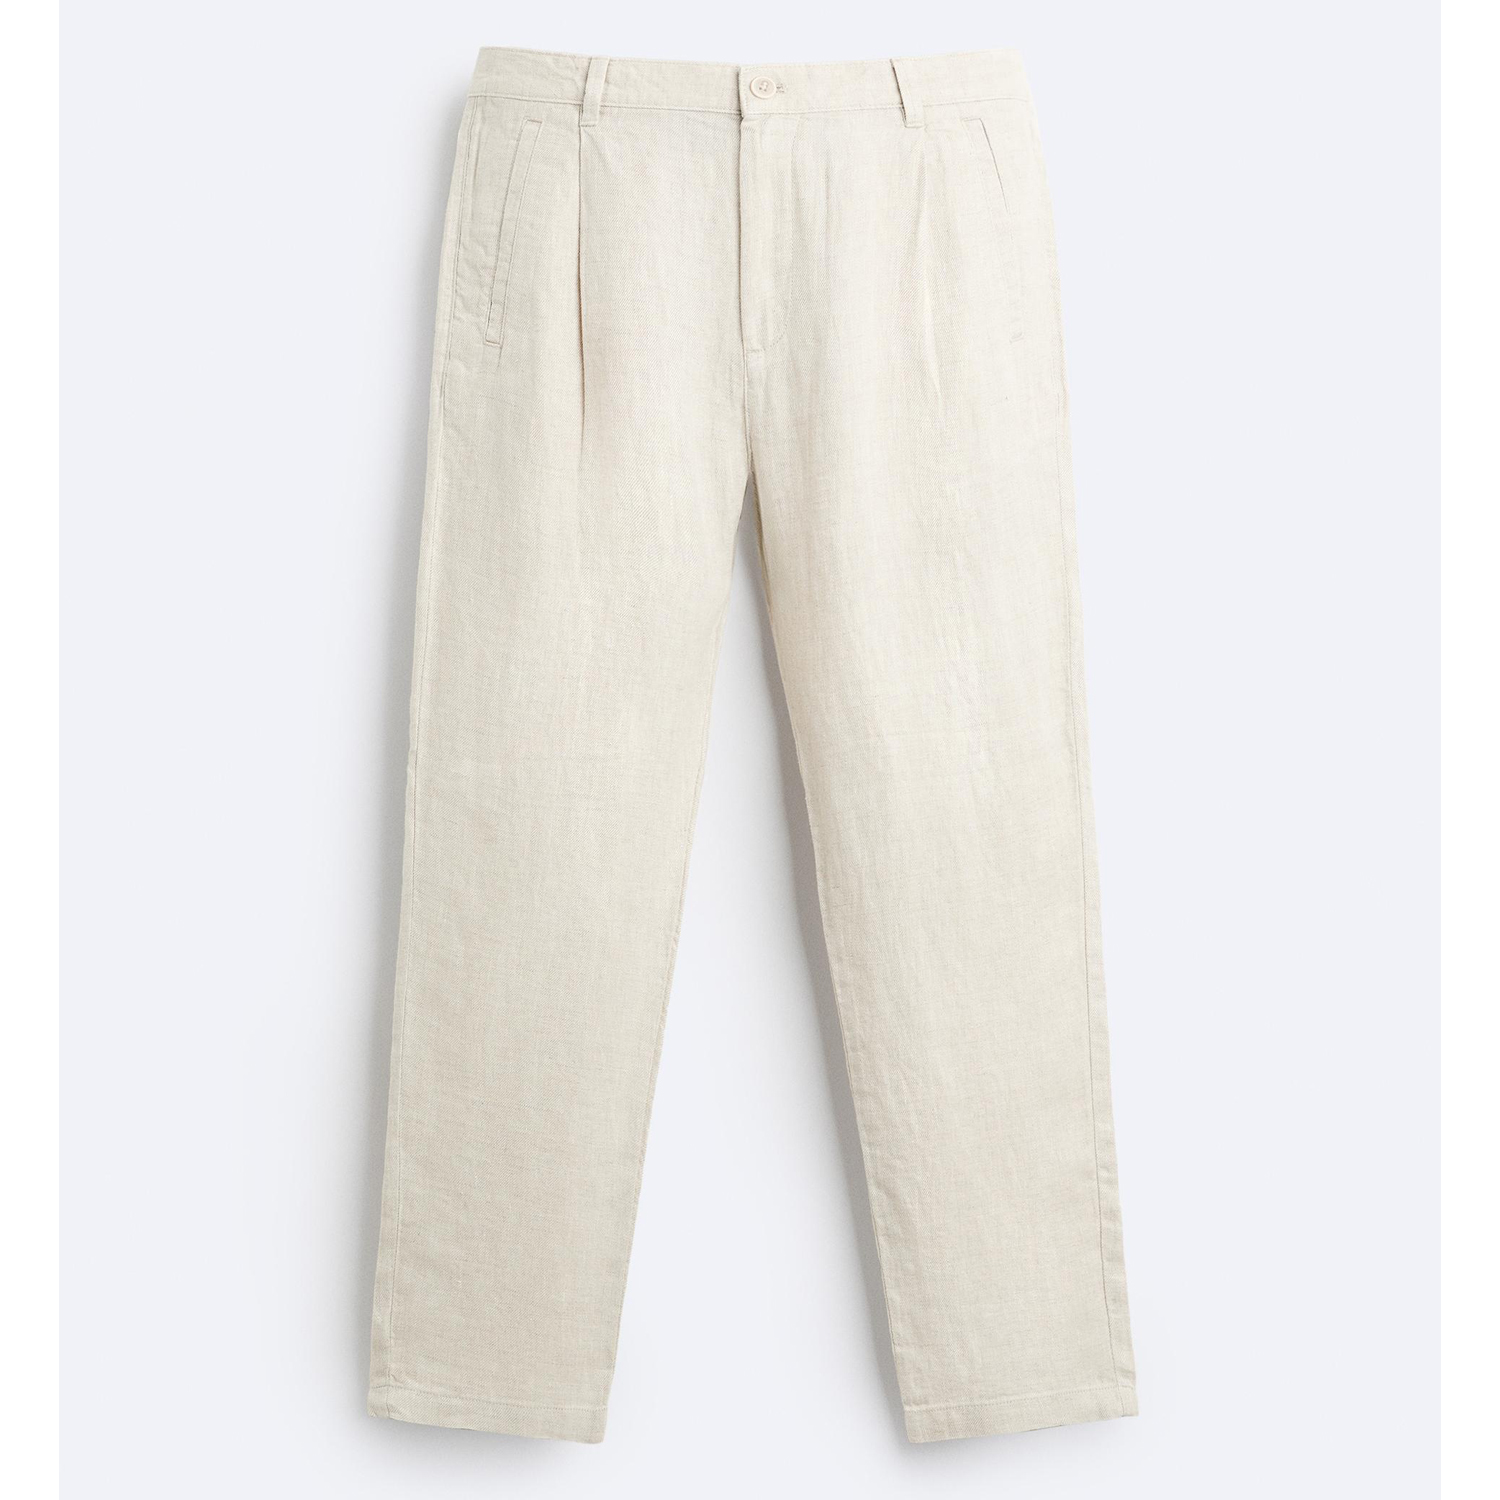 Брюки Zara 100% Linen, светло-бежевый брюки zara relaxed fit 100% linen белый